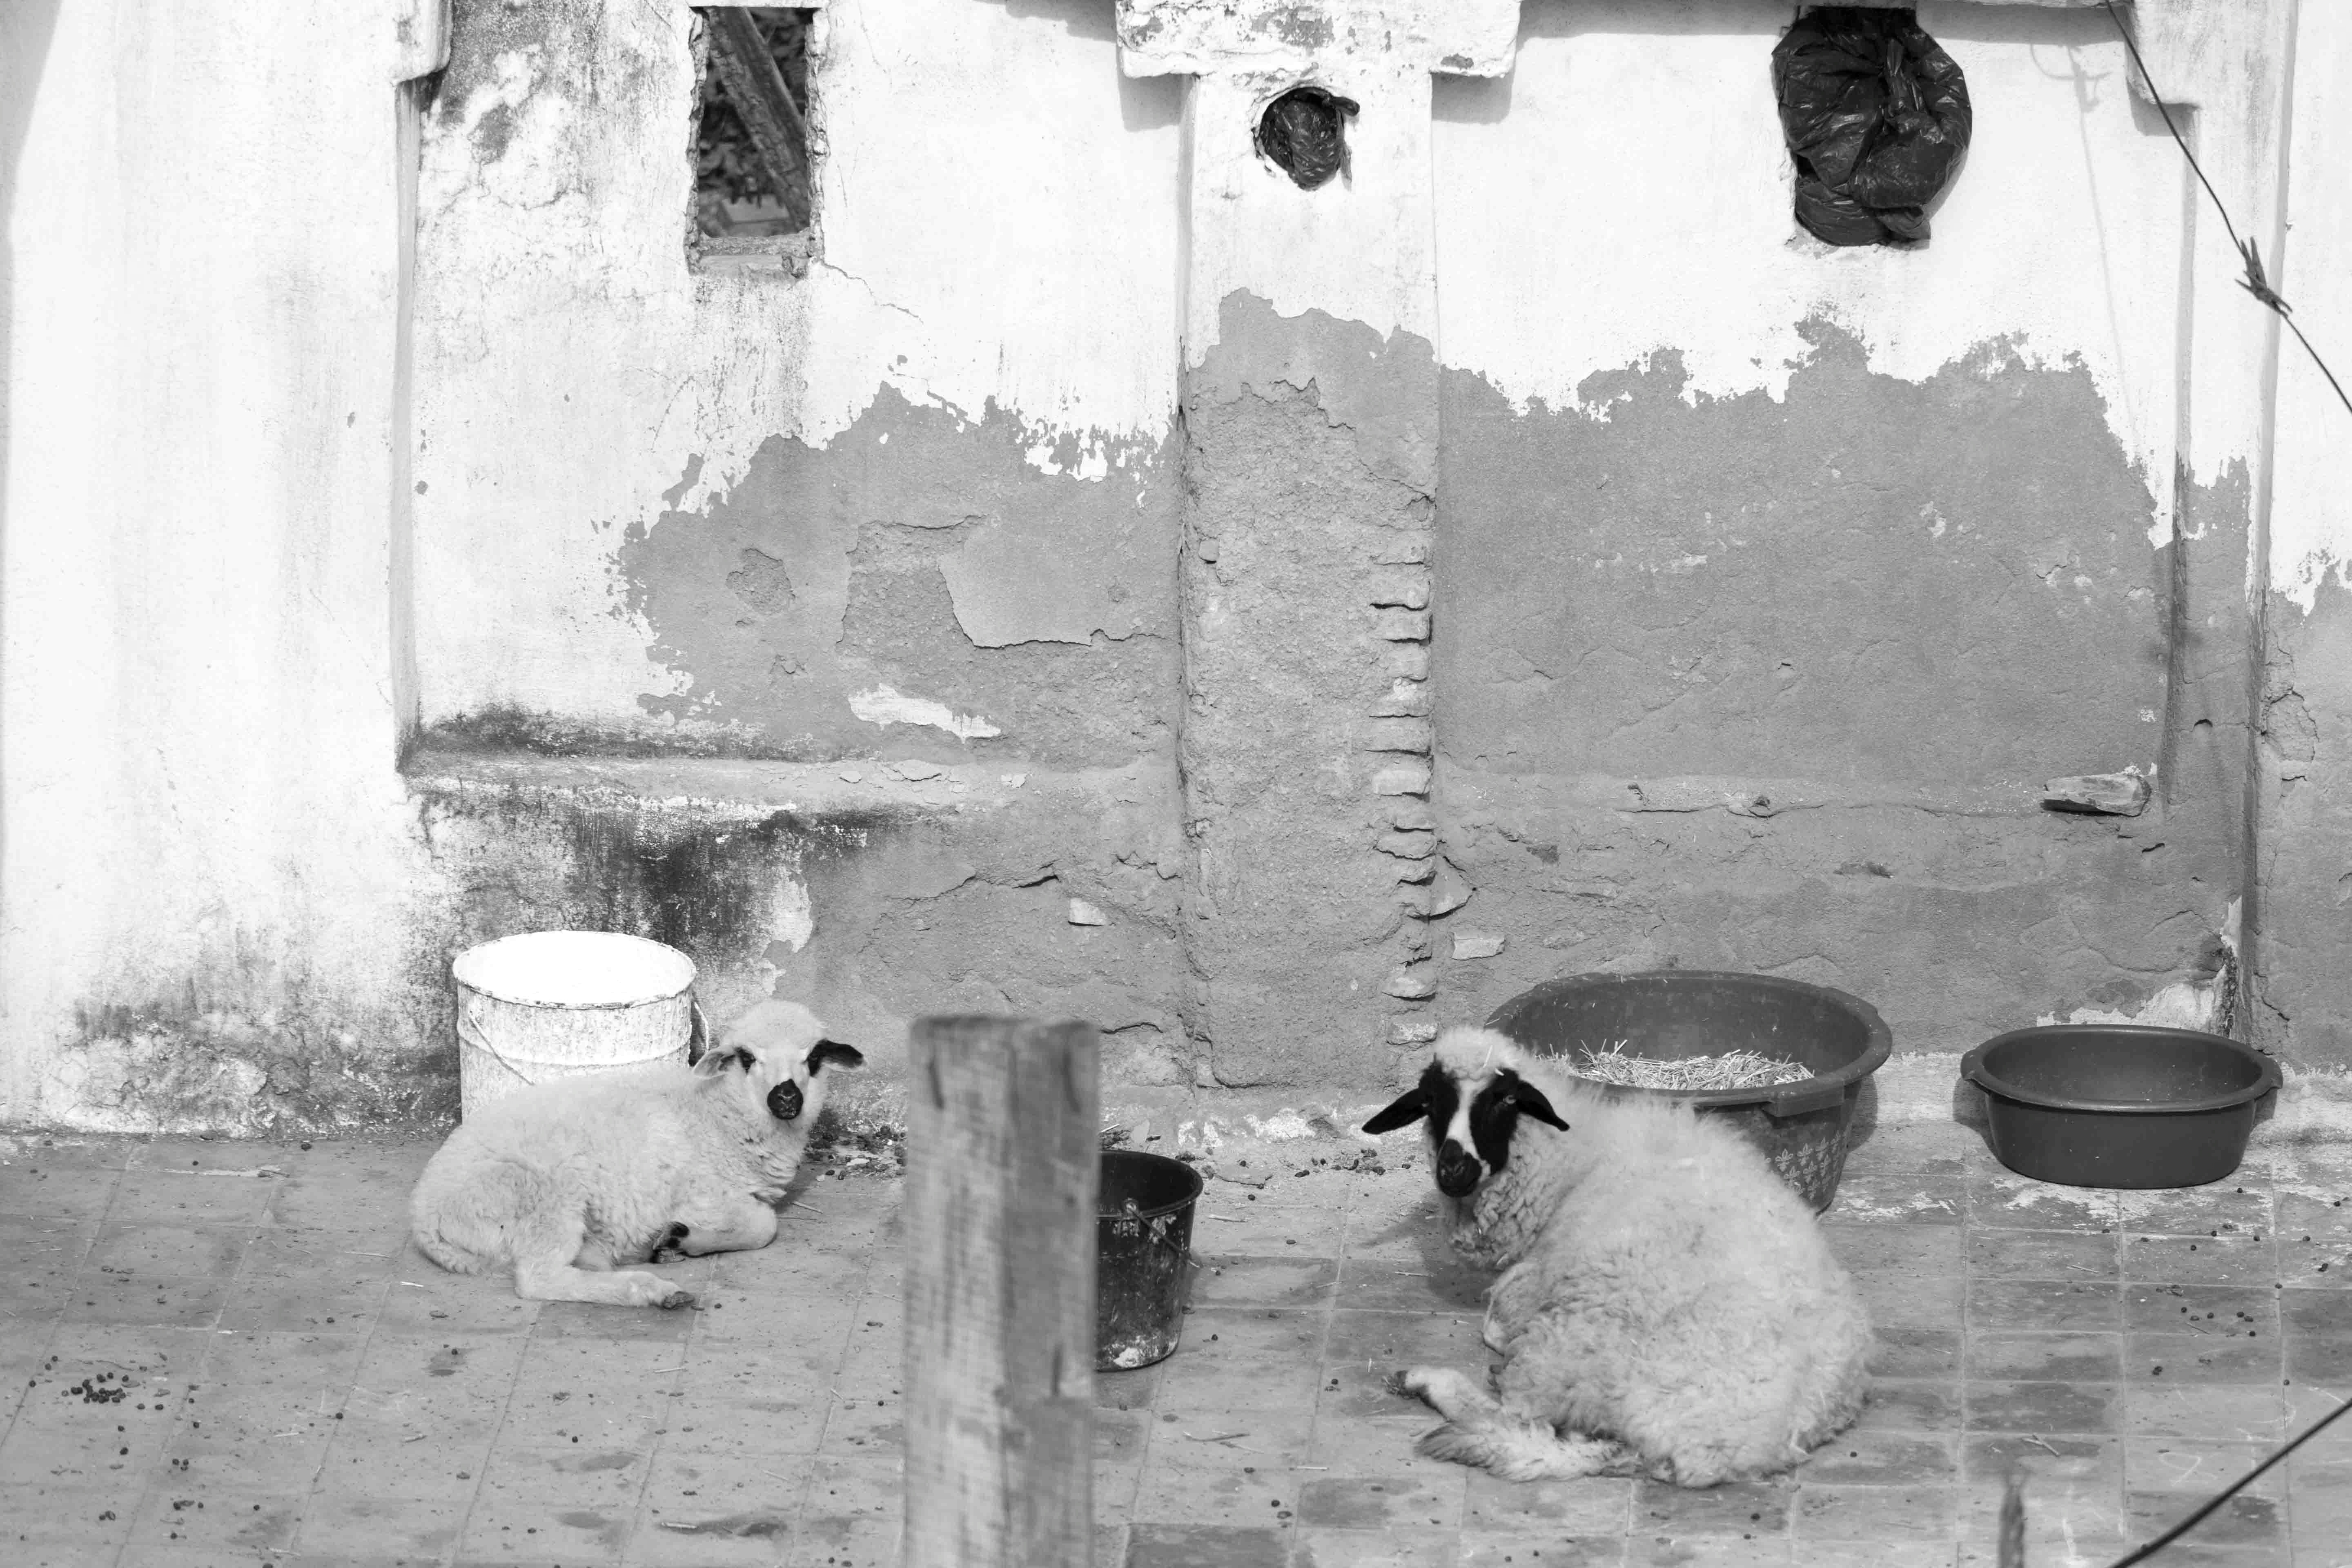 Magic Marocco: Sheep on the Roof